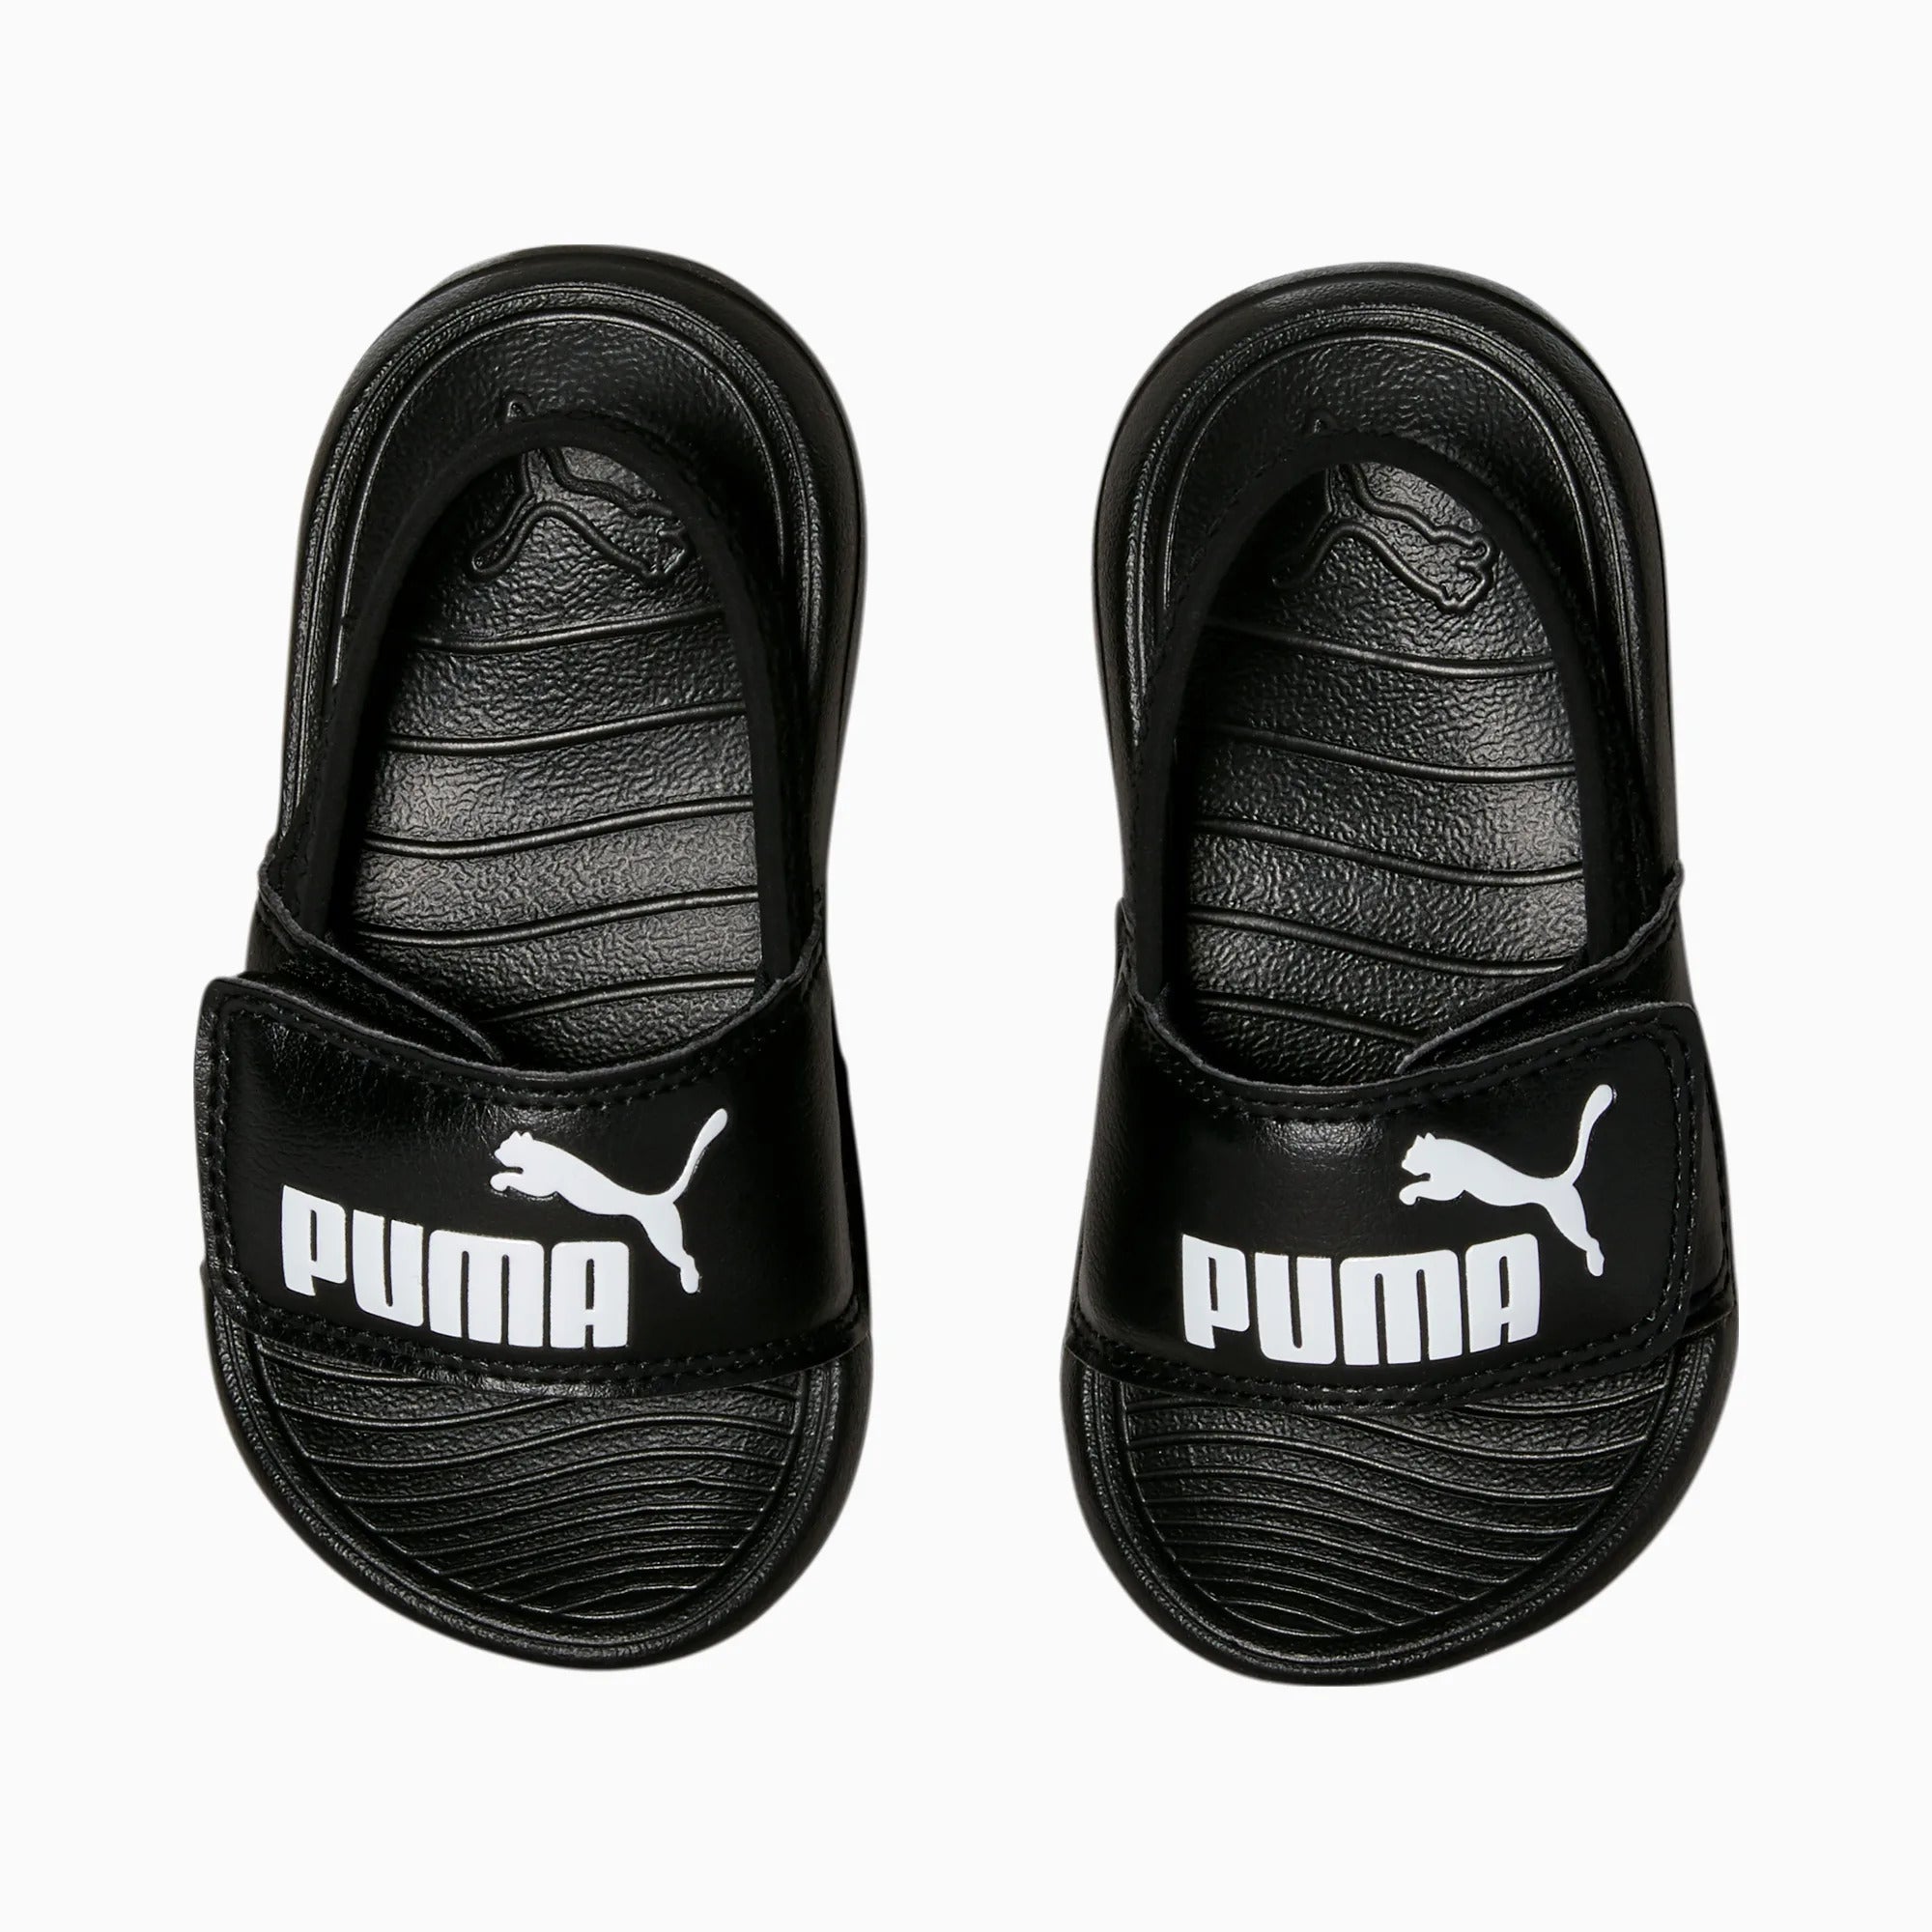 Puma sandales slides "Popcat" bébé Noir/blanc